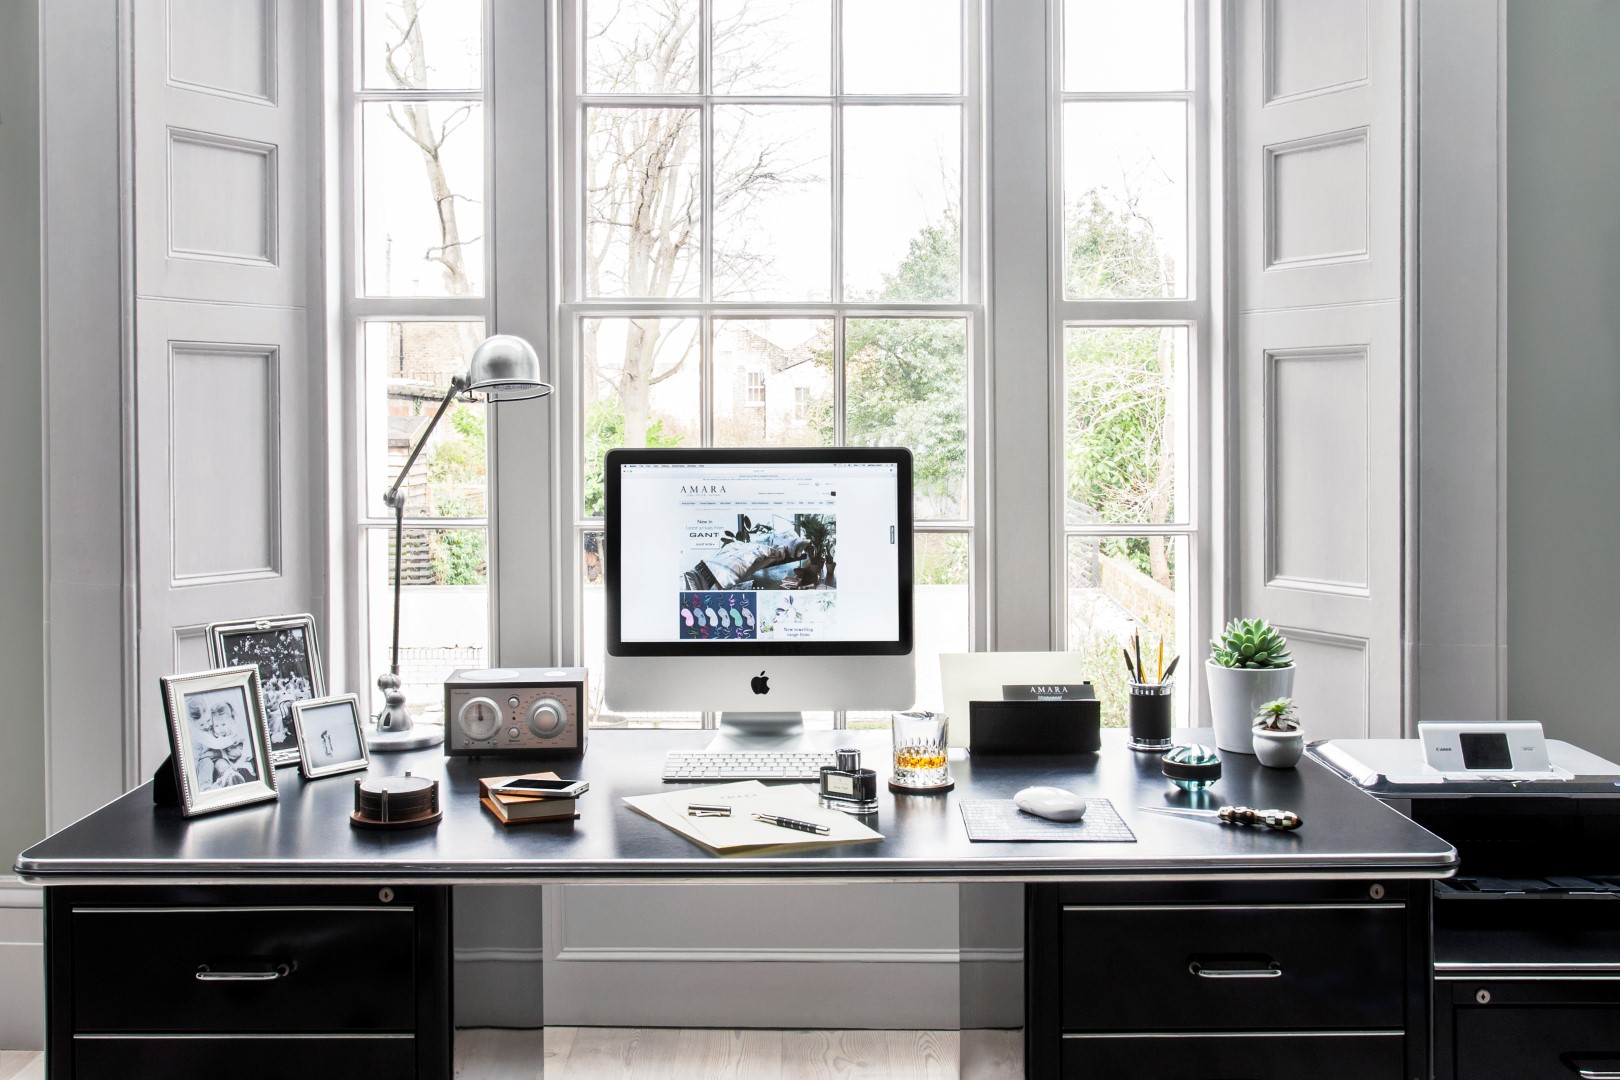 Interior Design Home Office: Create An Inspiring Workspace